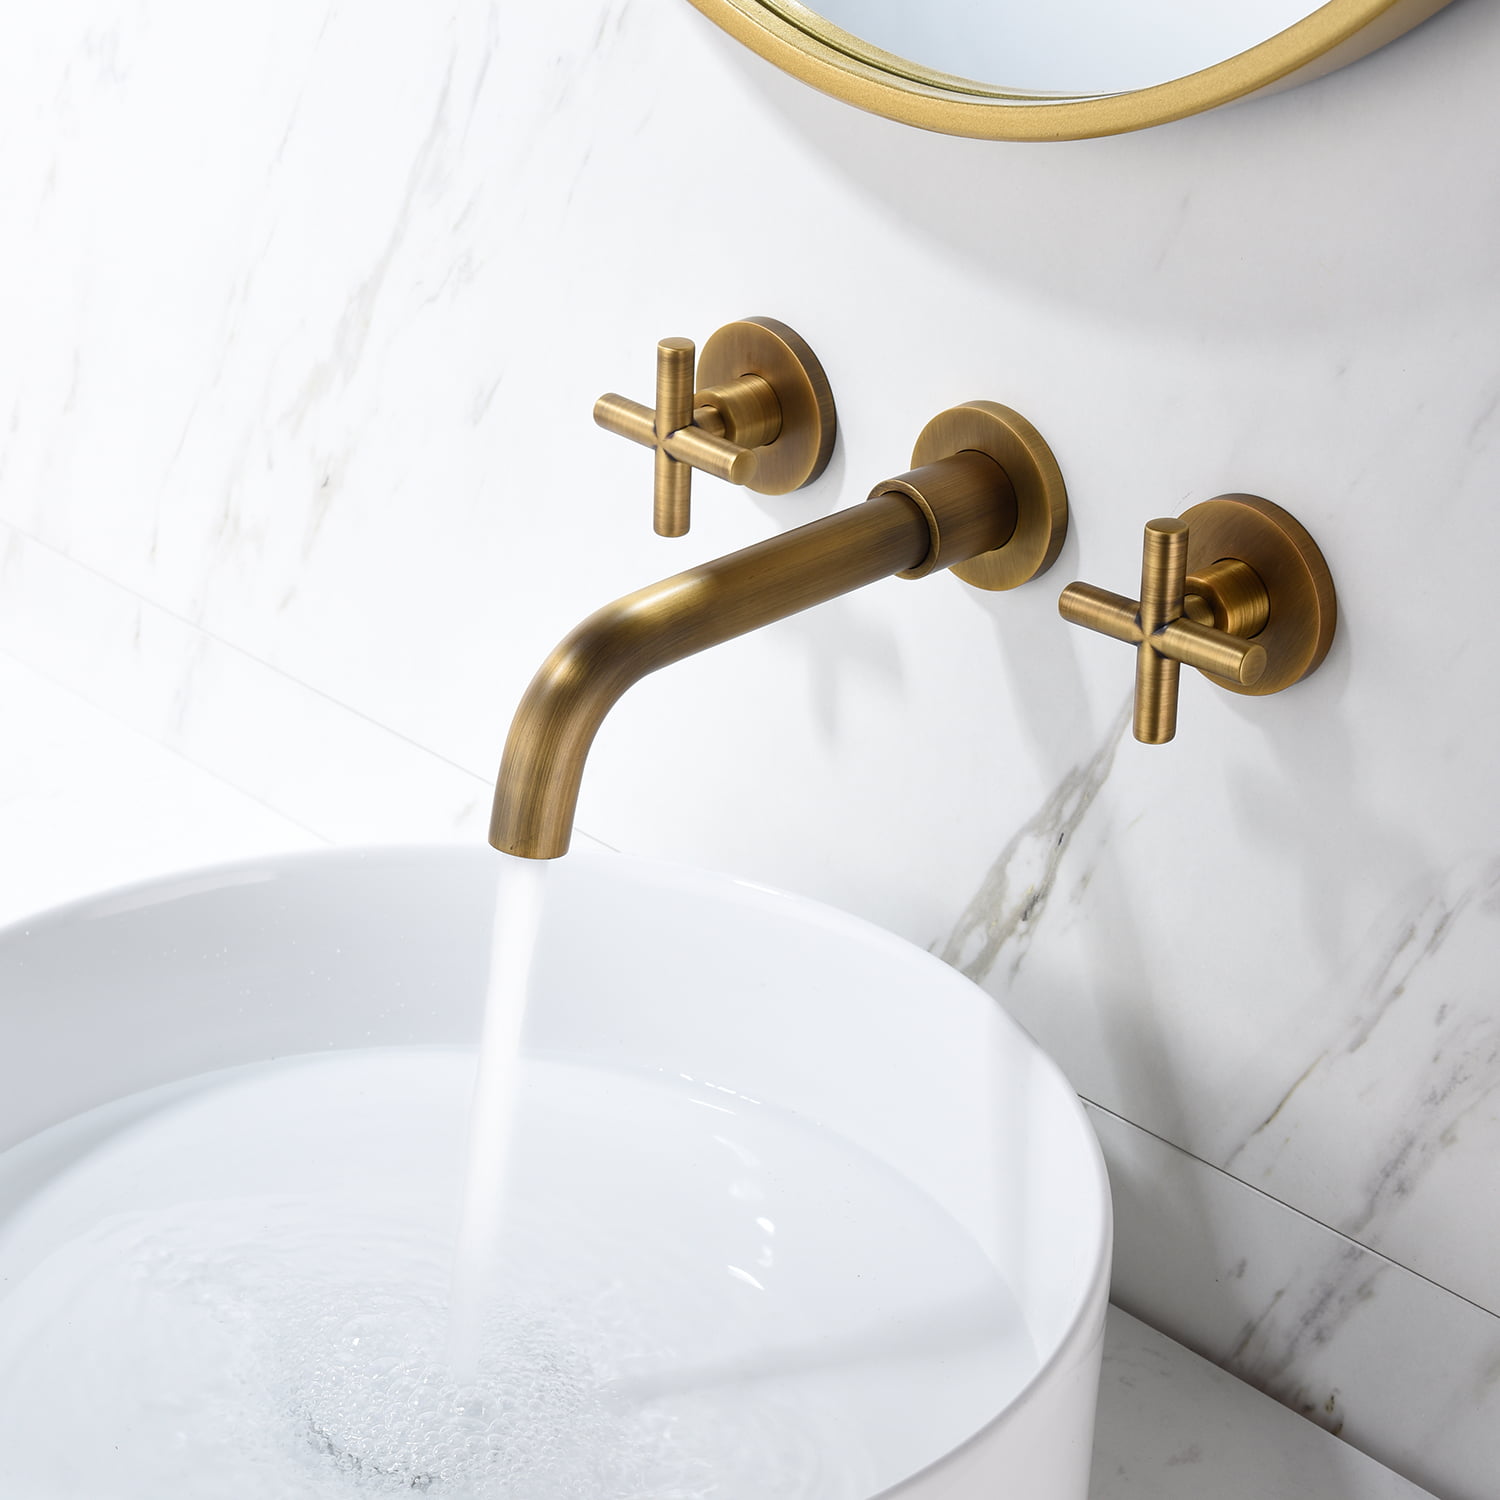 Antique Brass Swivel Two Handle Bathroom Kitchen Basin Mixer Taps Sink Faucet